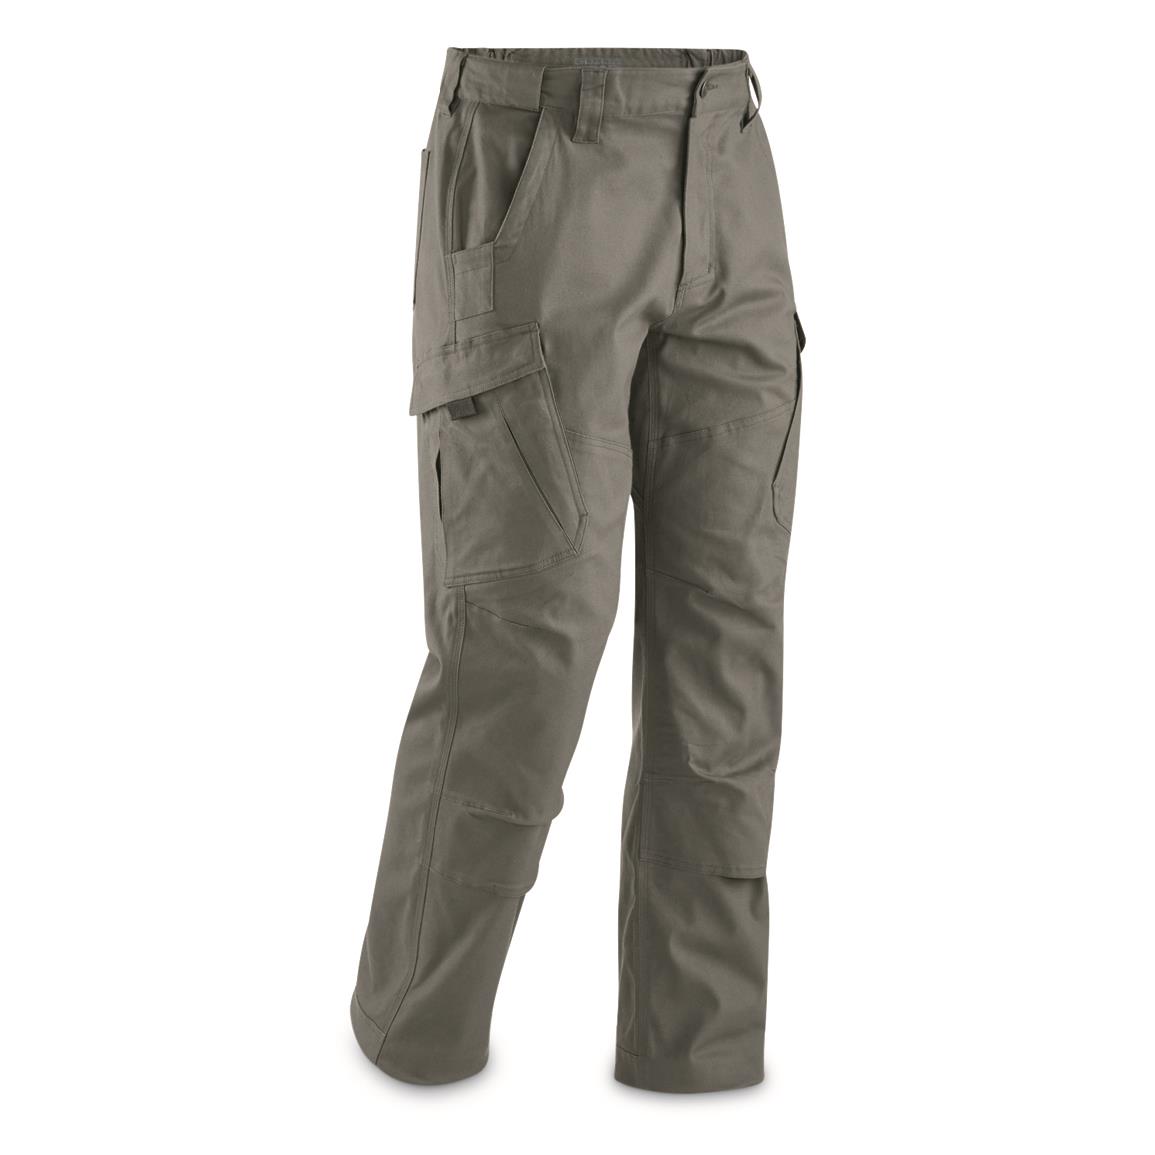 HuntRite Men's Cargo Sweatpants - 203616, Jeans & Pants at Sportsman's ...